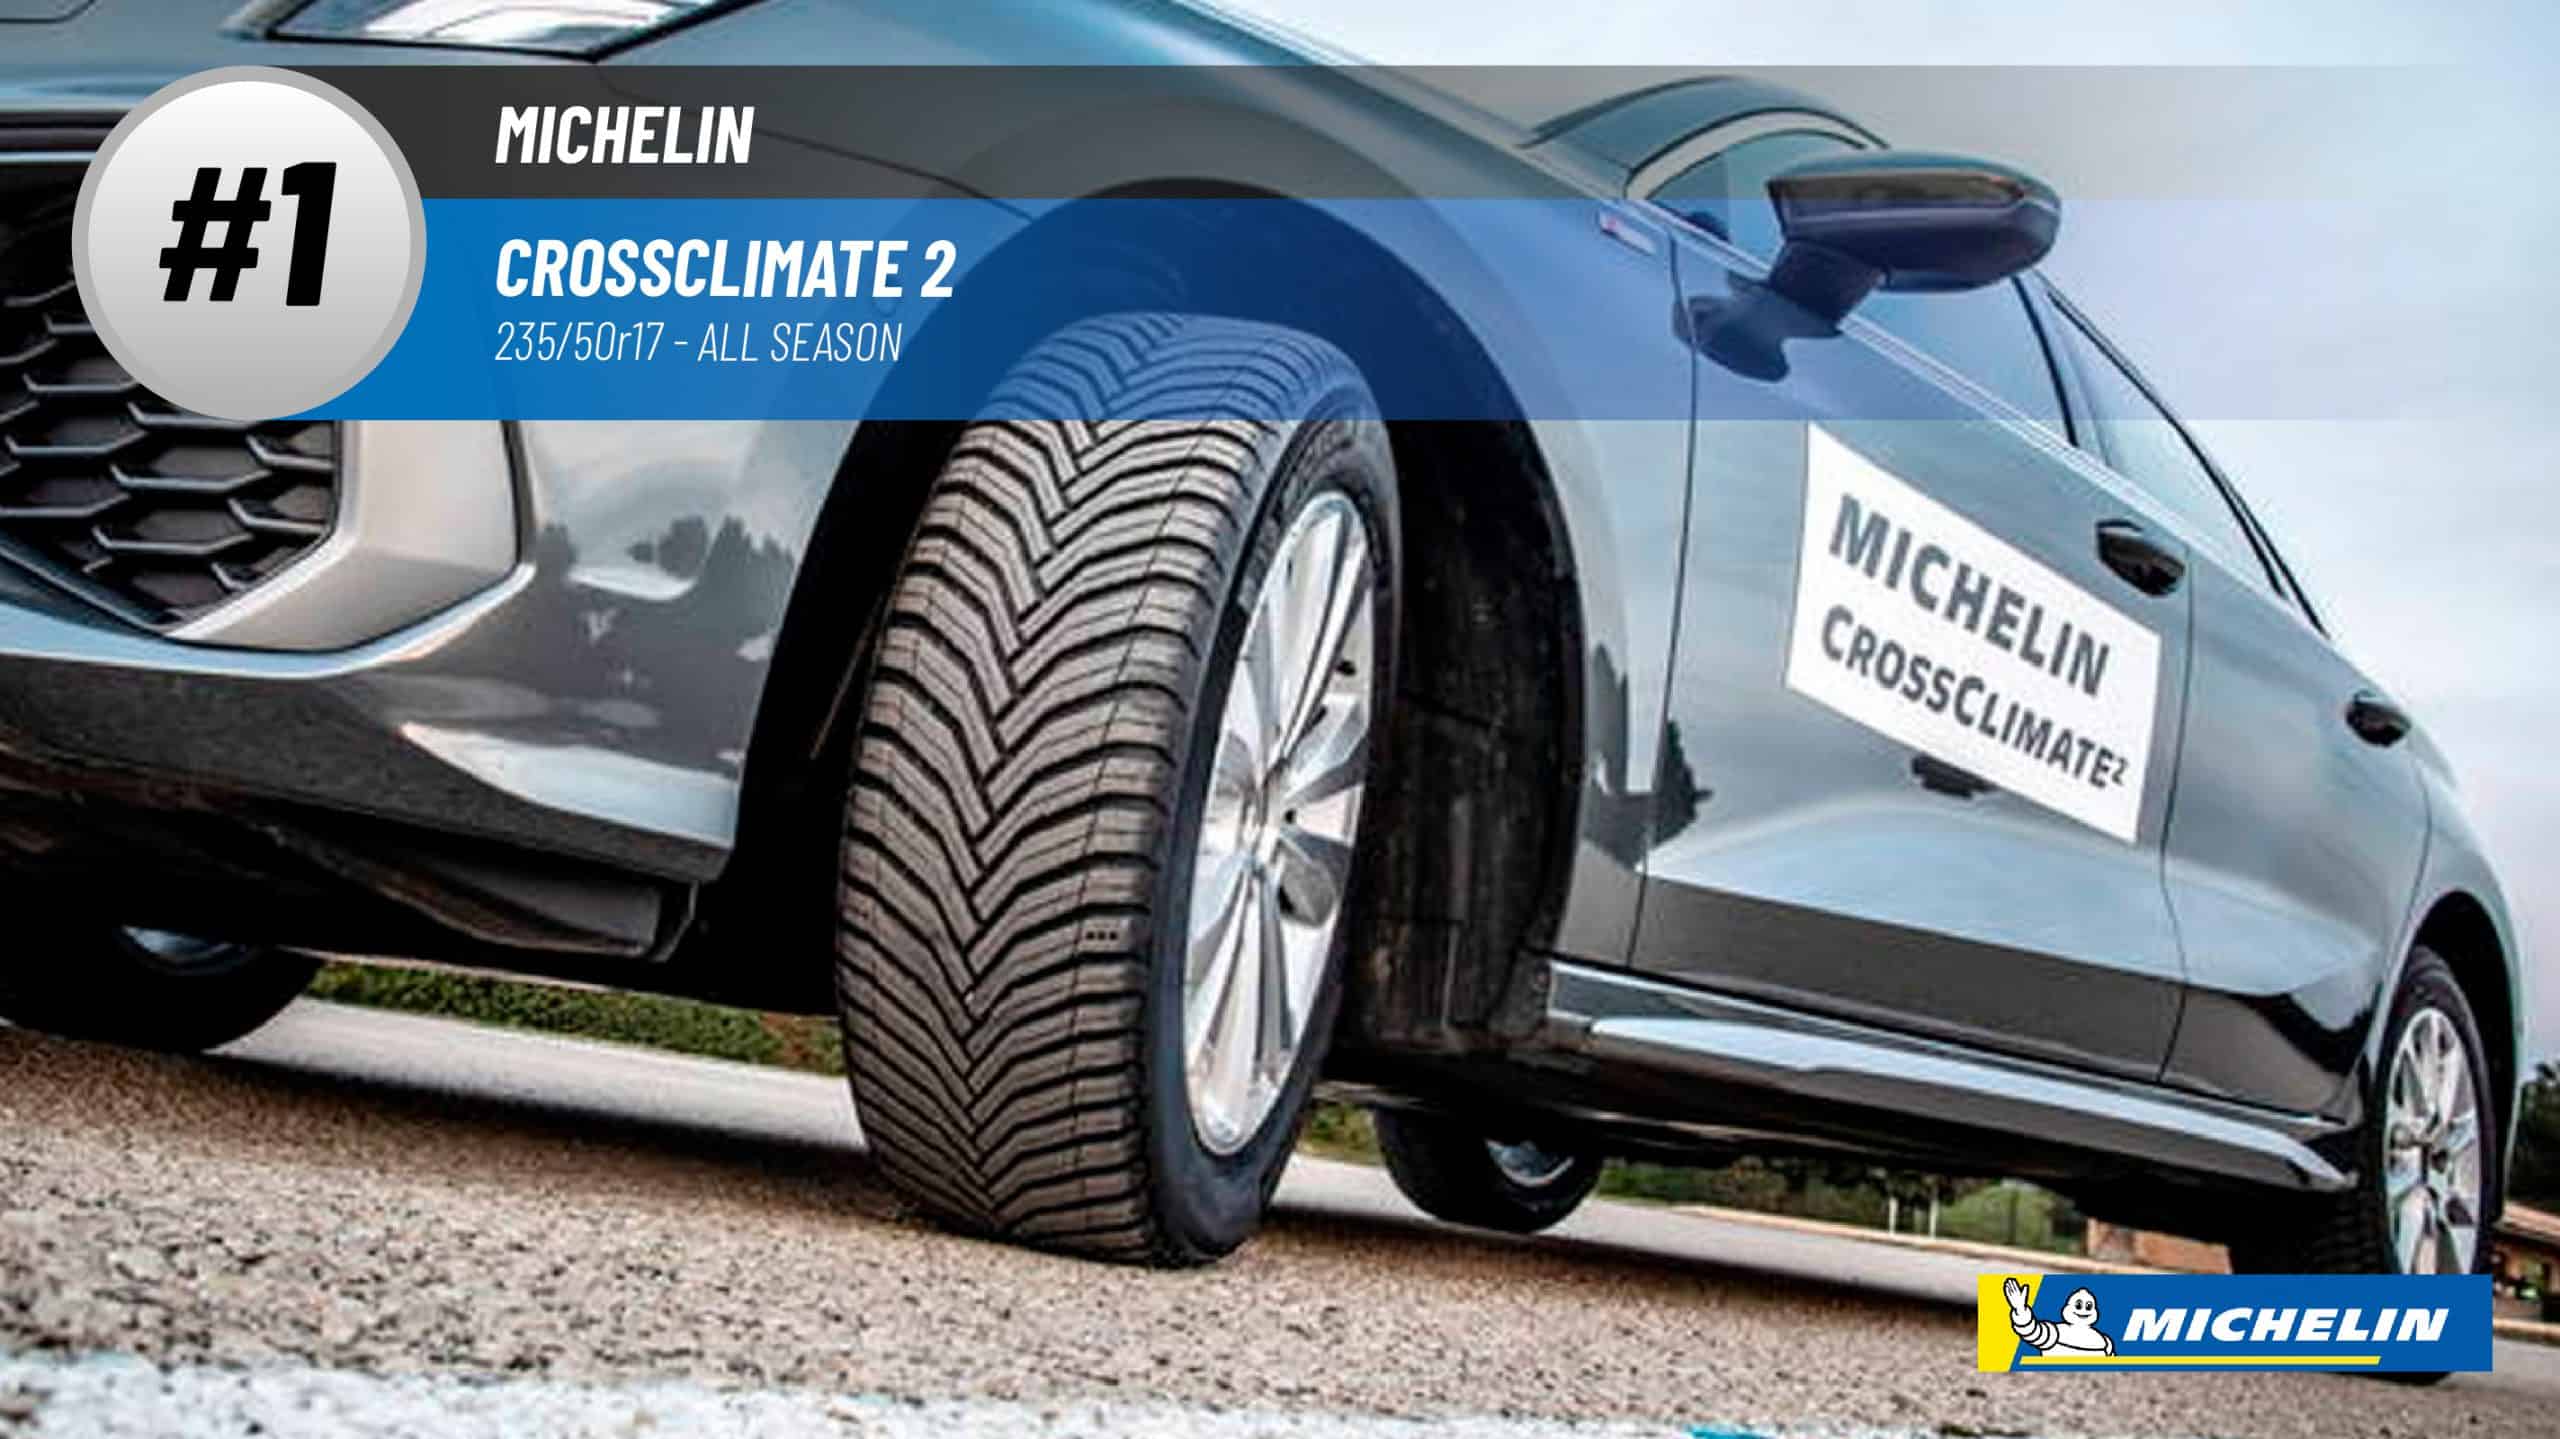 Top #1 All Season Tires: Michelin Crossclimate 2 – 235/50R17